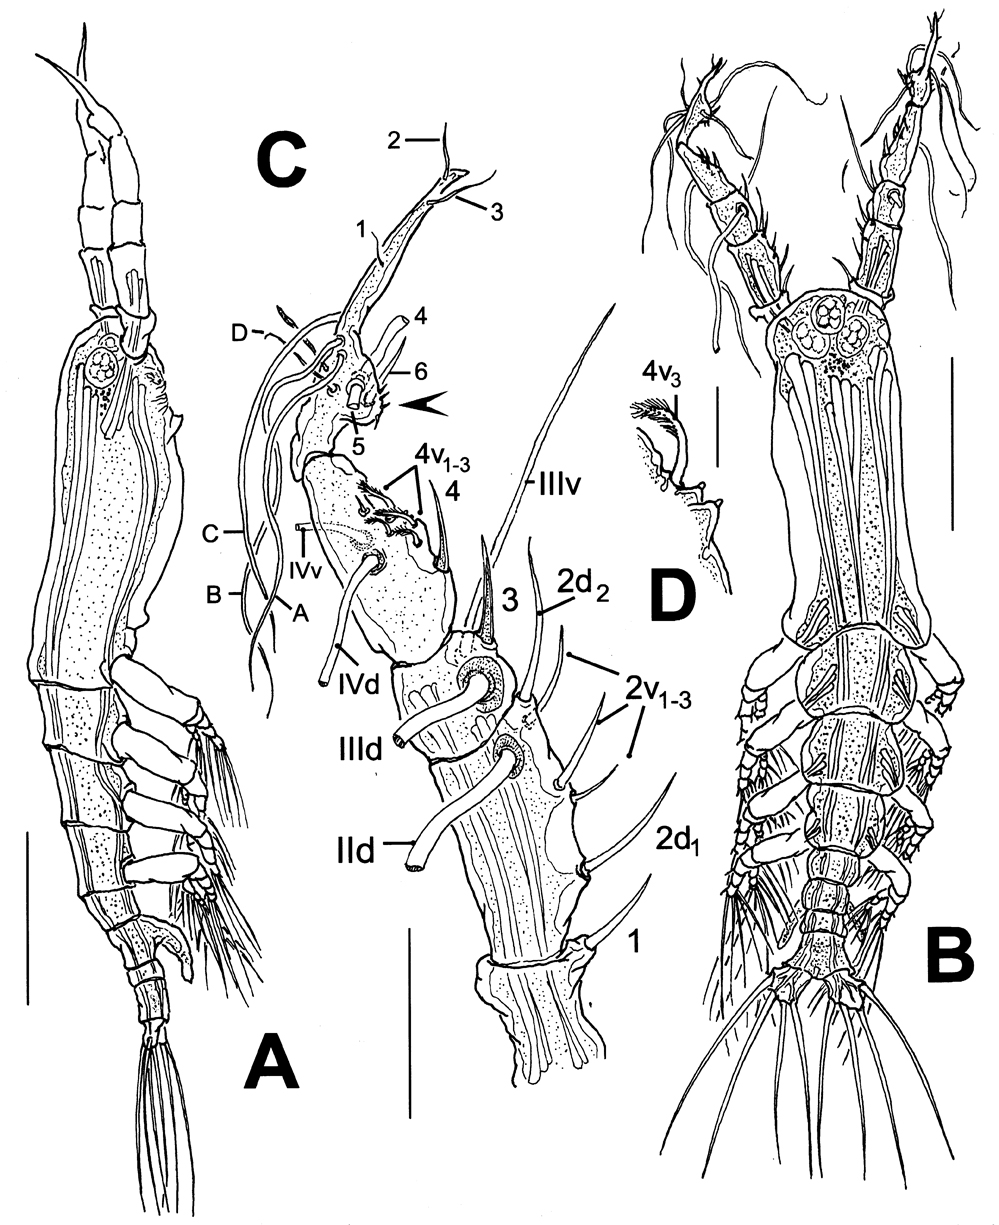 Species Monstrillopsis hastata - Plate 1 of morphological figures